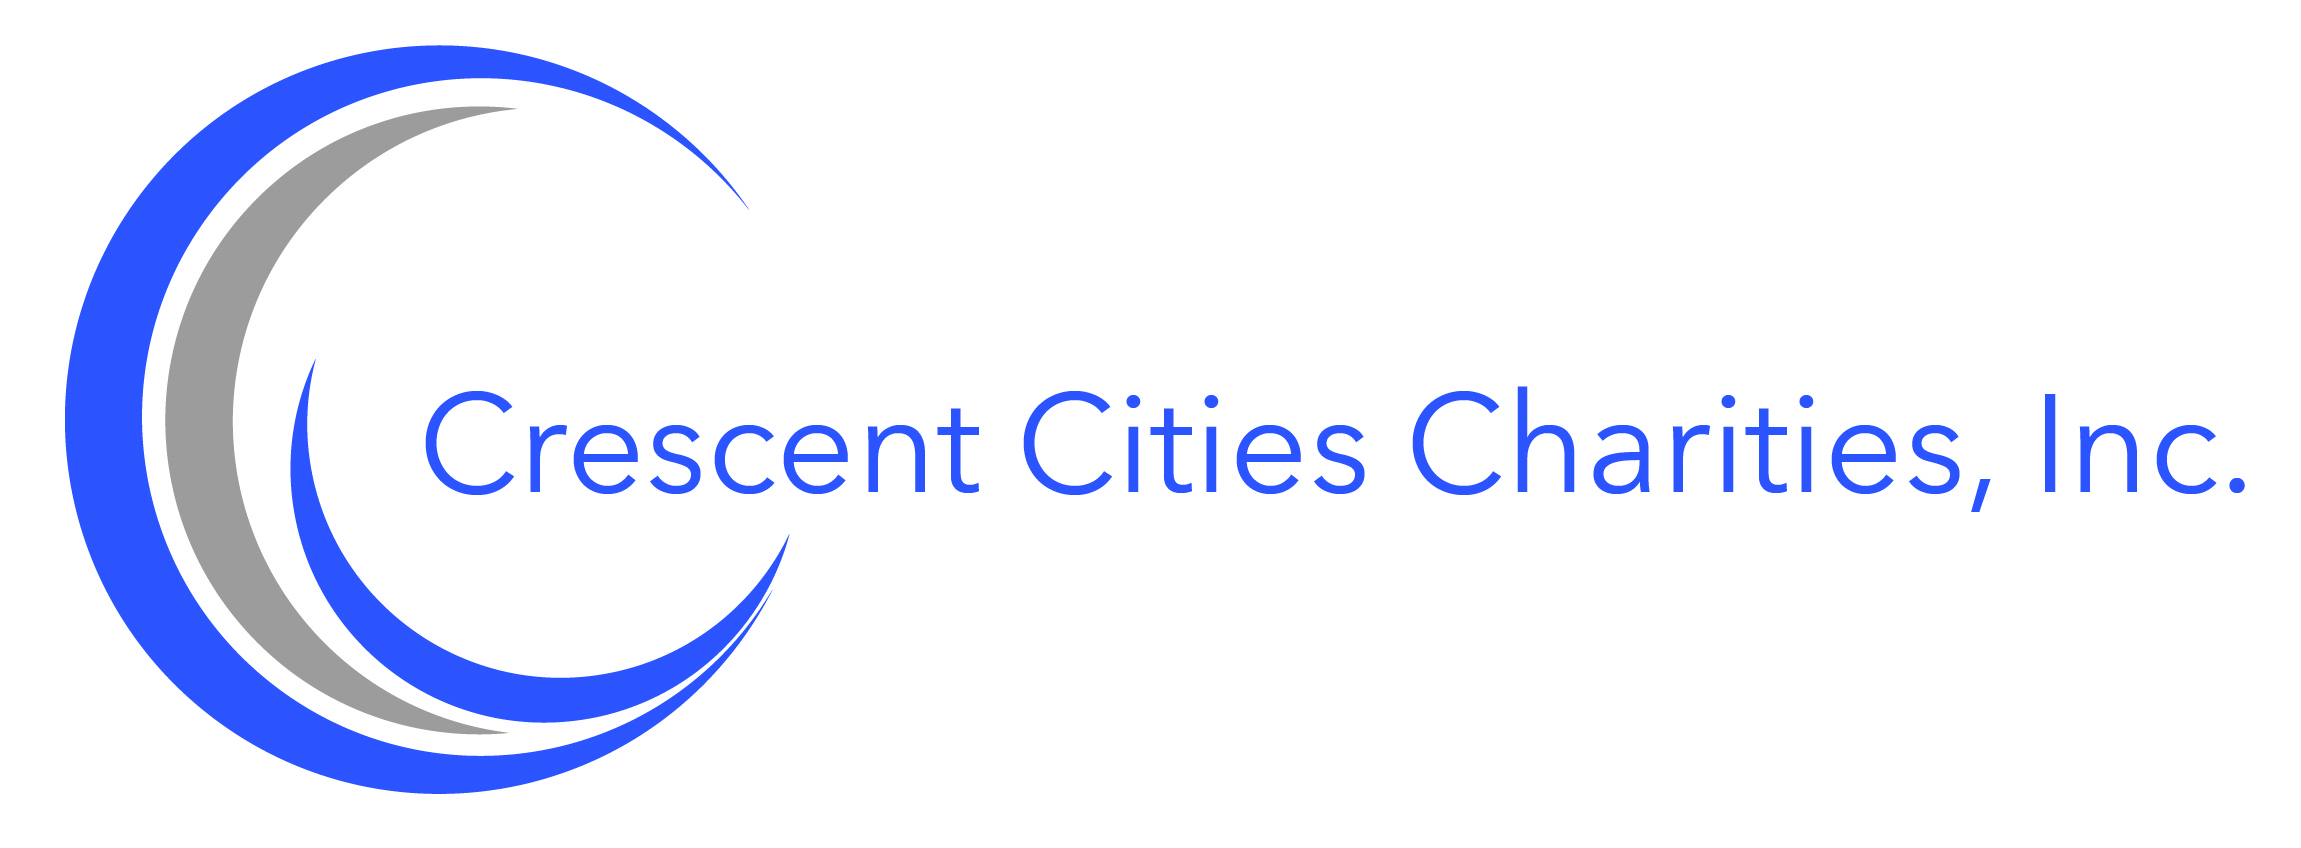 Crescent Cities Charities, Inc. 